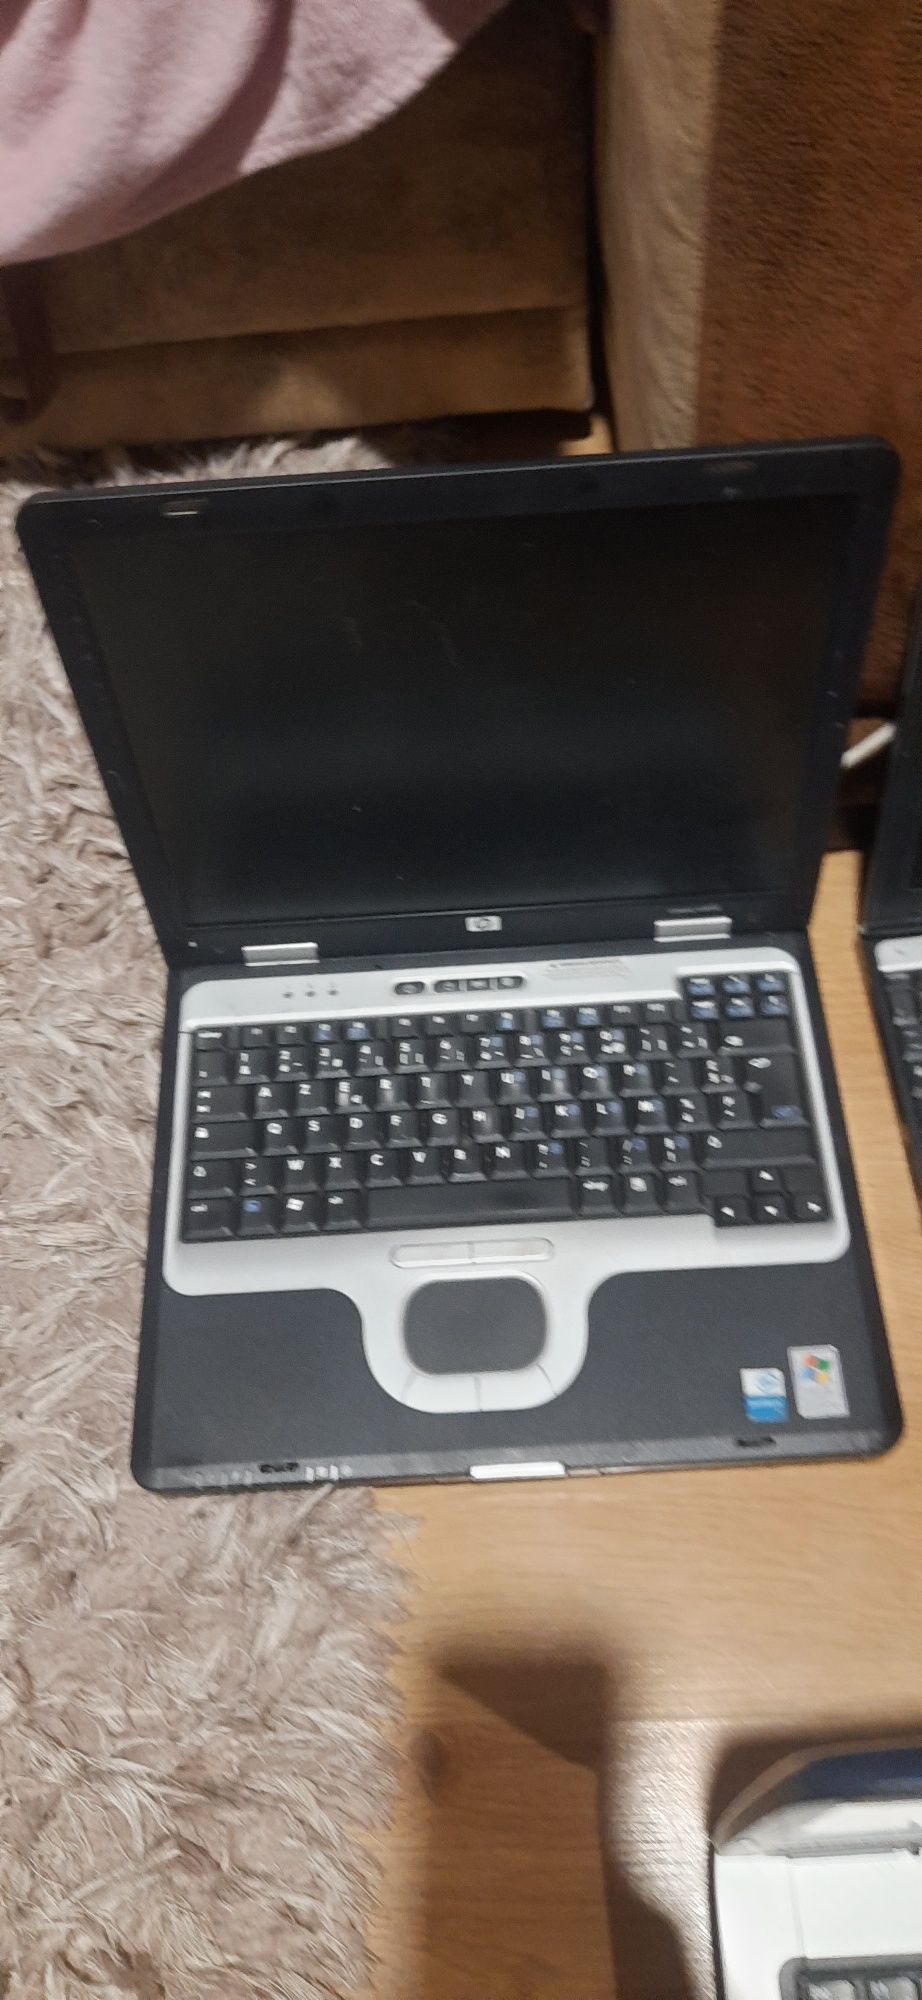 Stare  laptopy sprawne